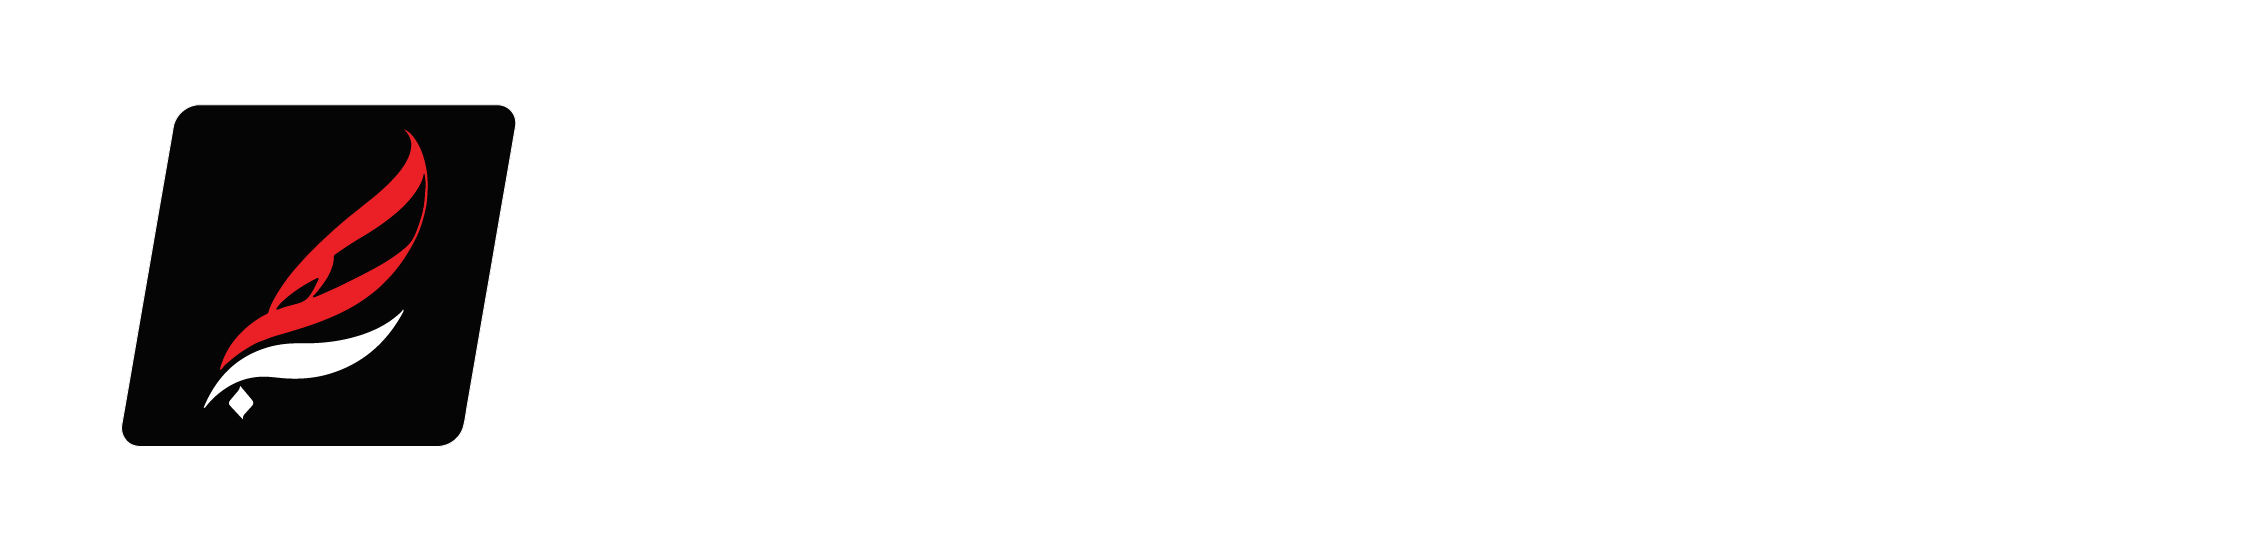 bh travel paketi